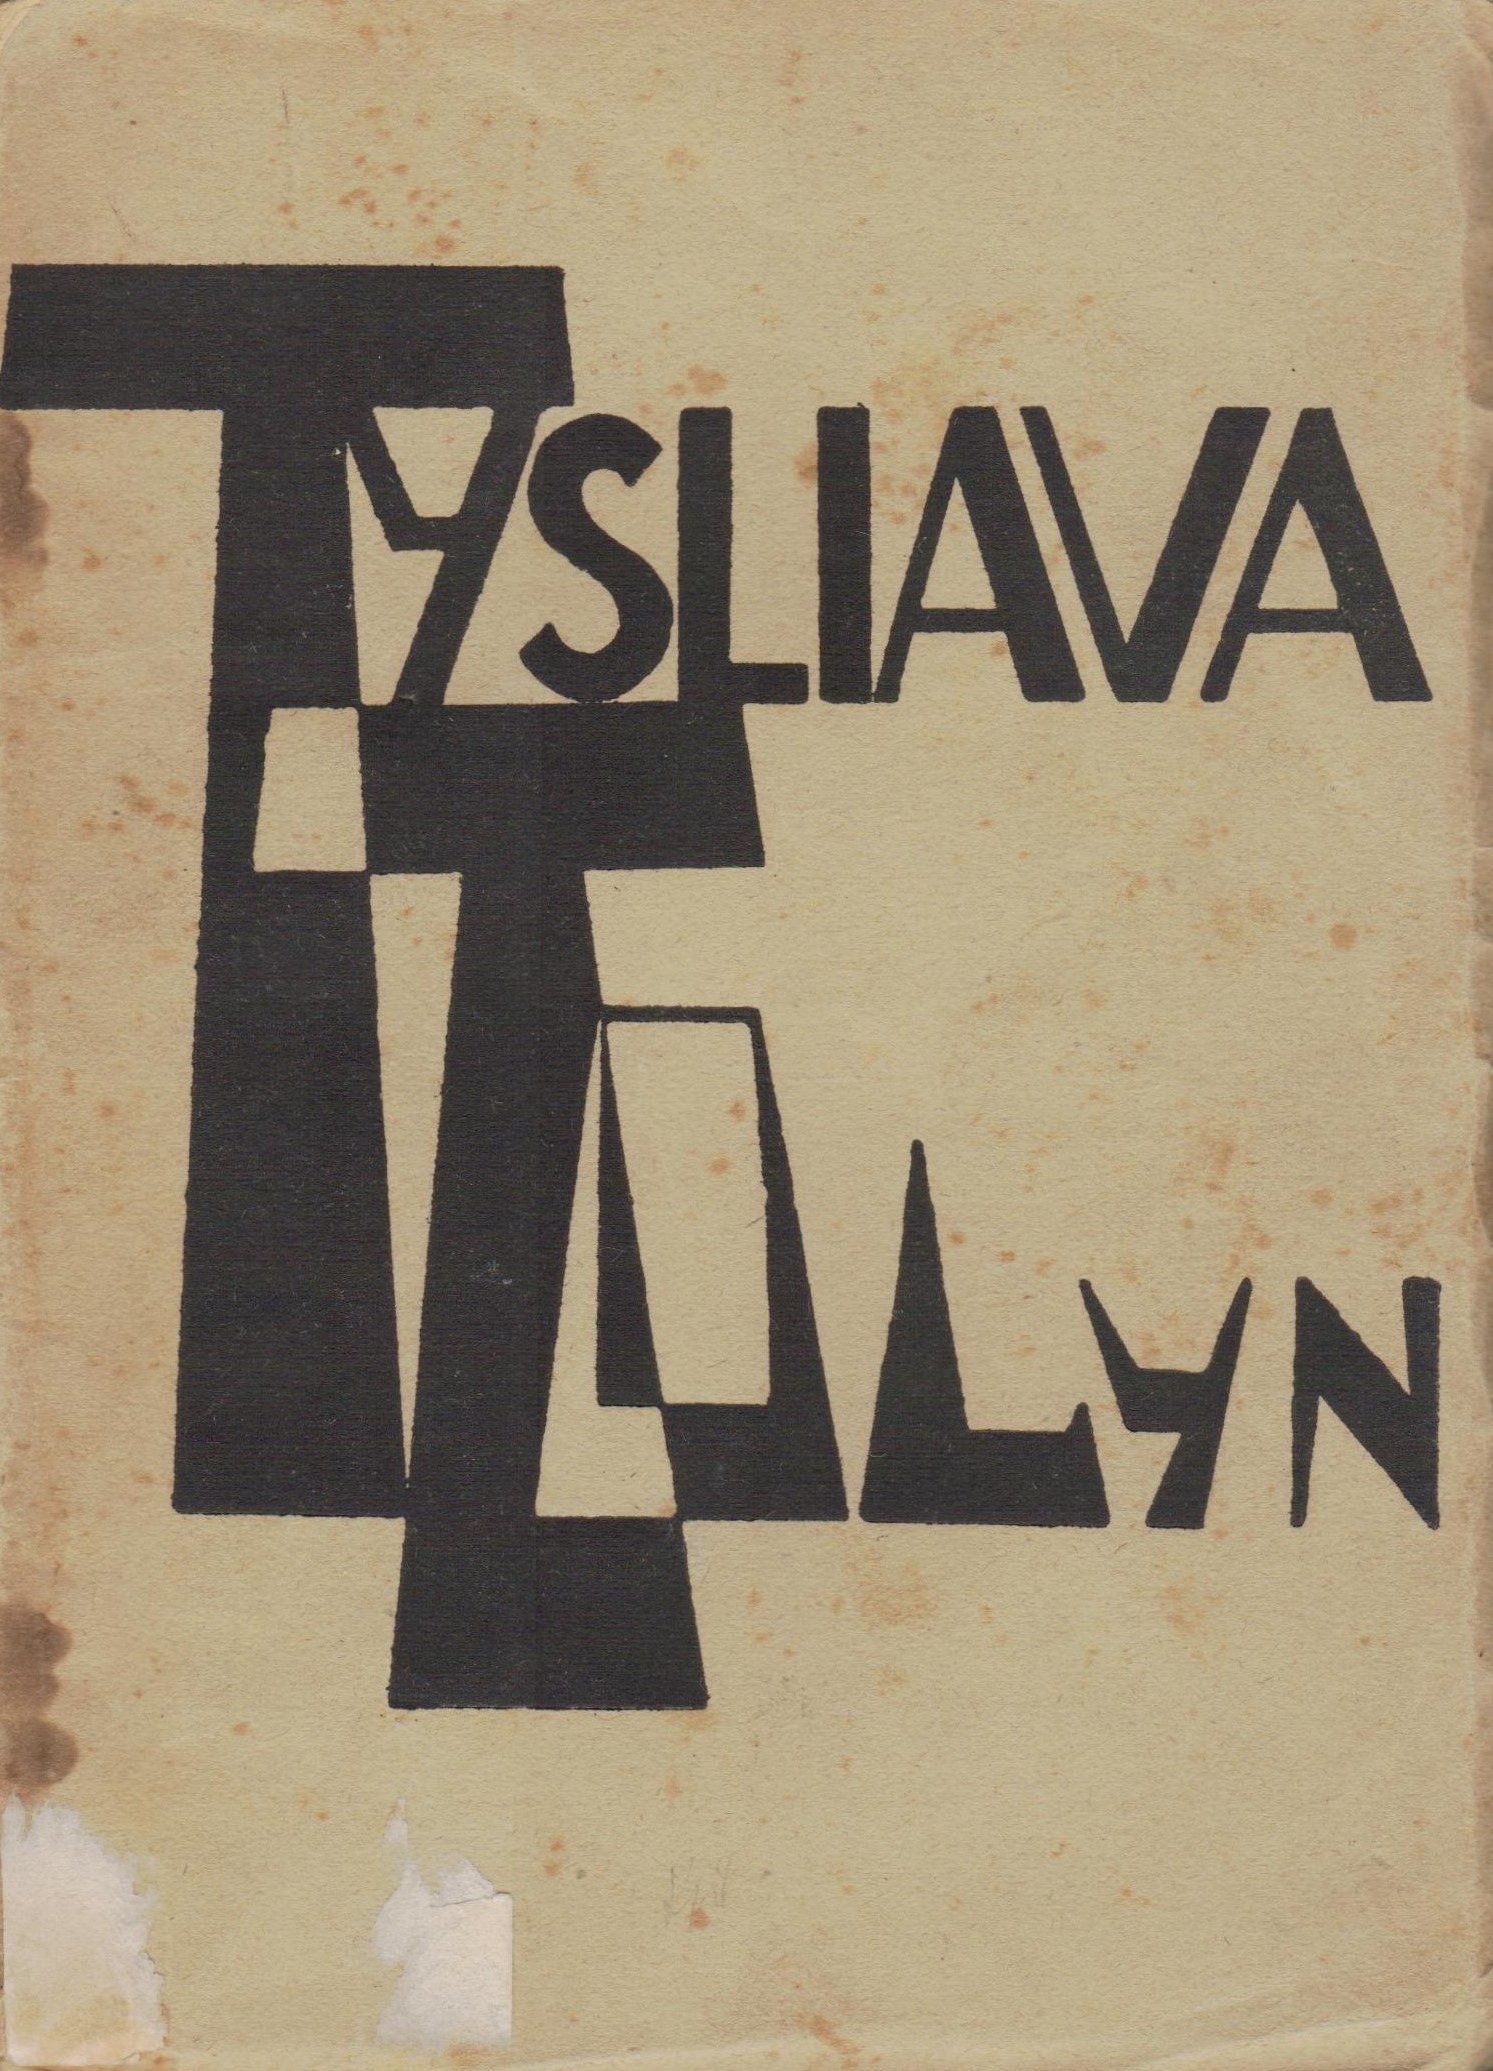 J. Tysliava. Tolyn. 1926 m. MLLM 28757